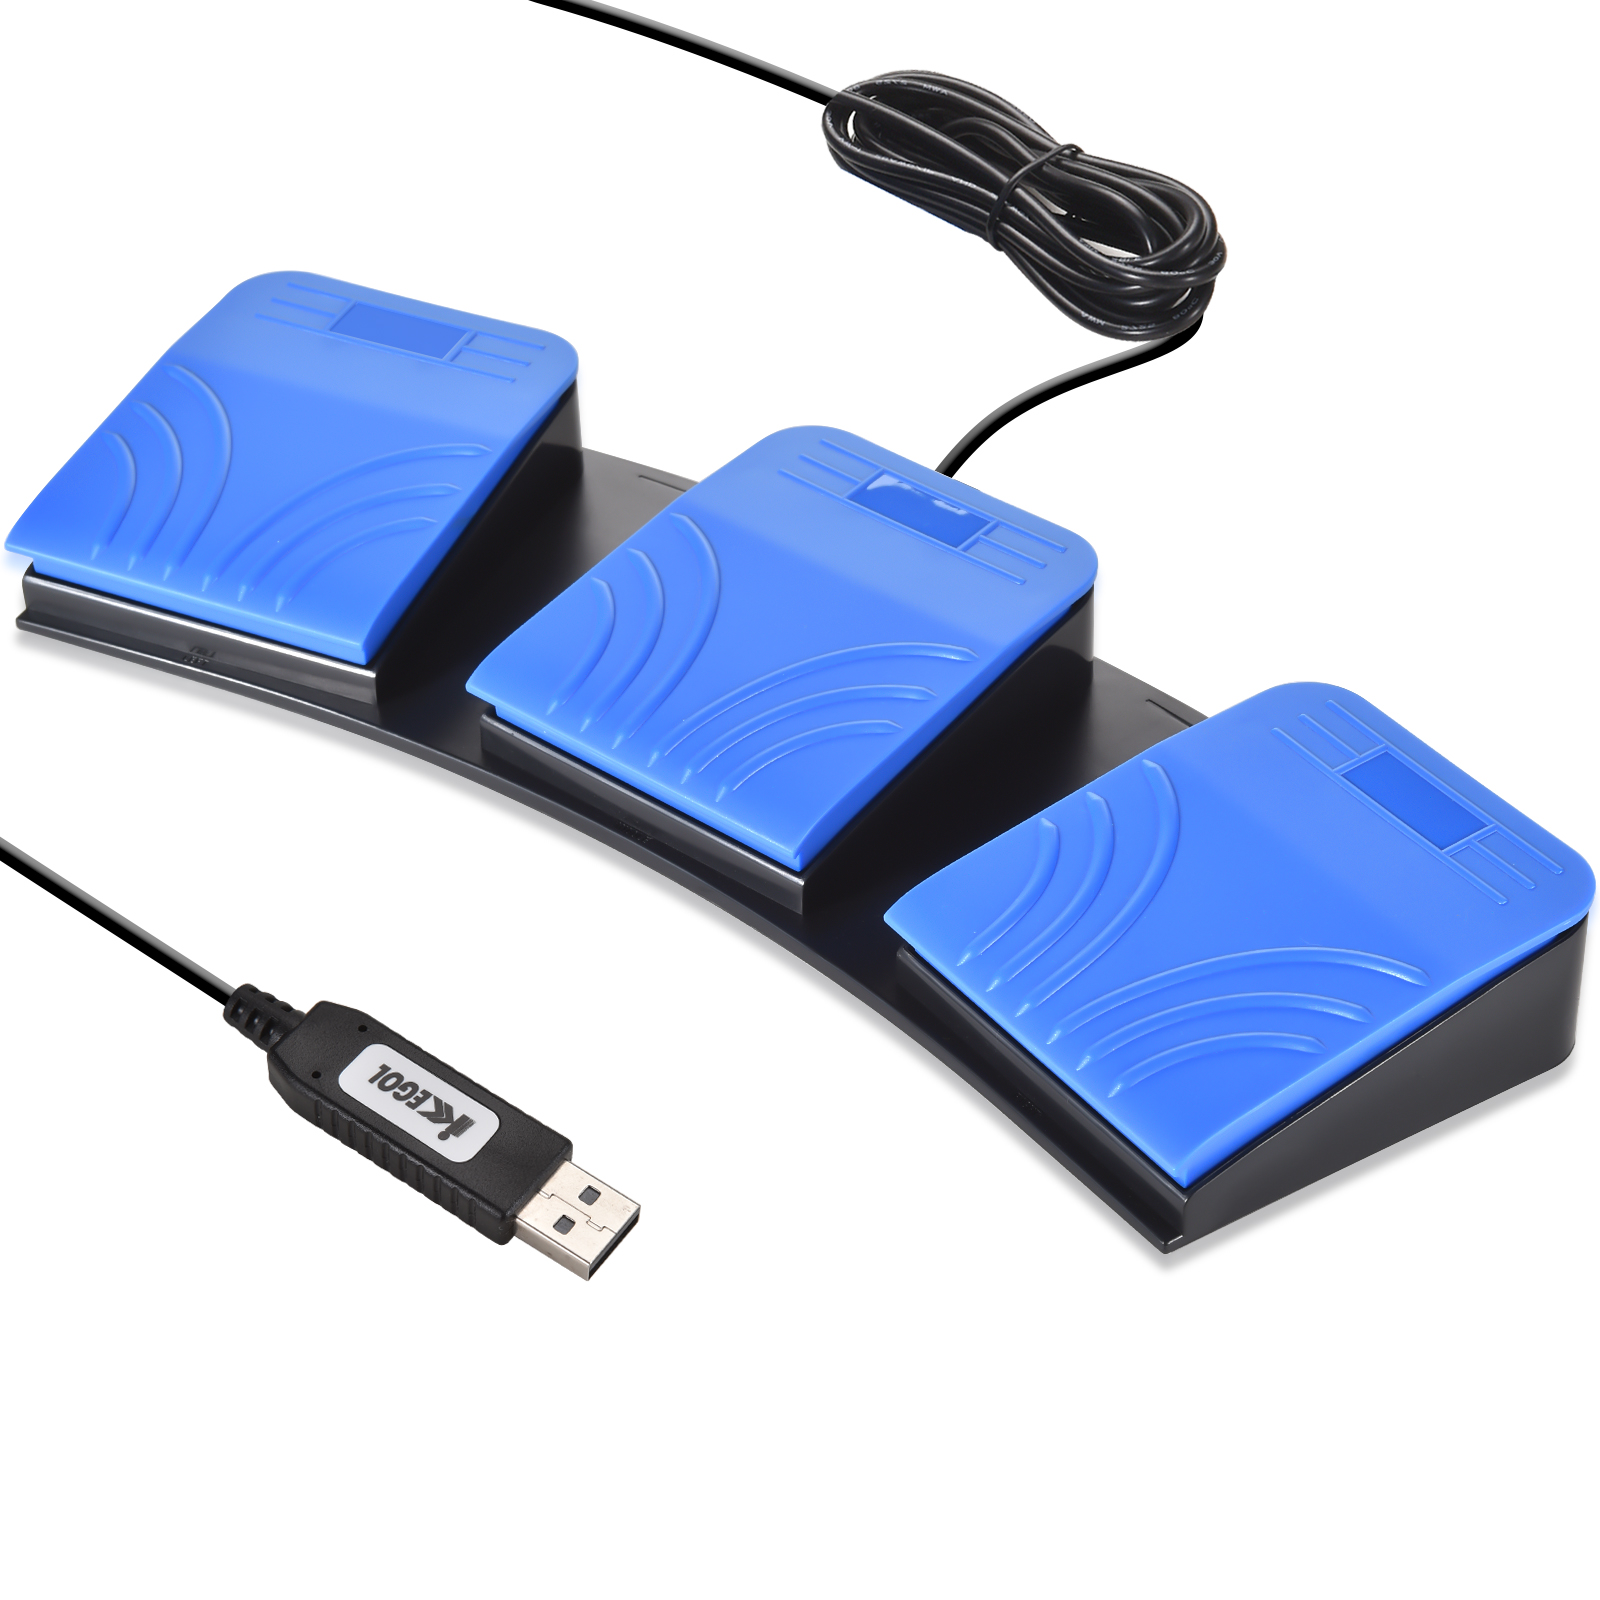 [Upgraded] iKKEGOL USB Triple Foot Pedal Optical Switch